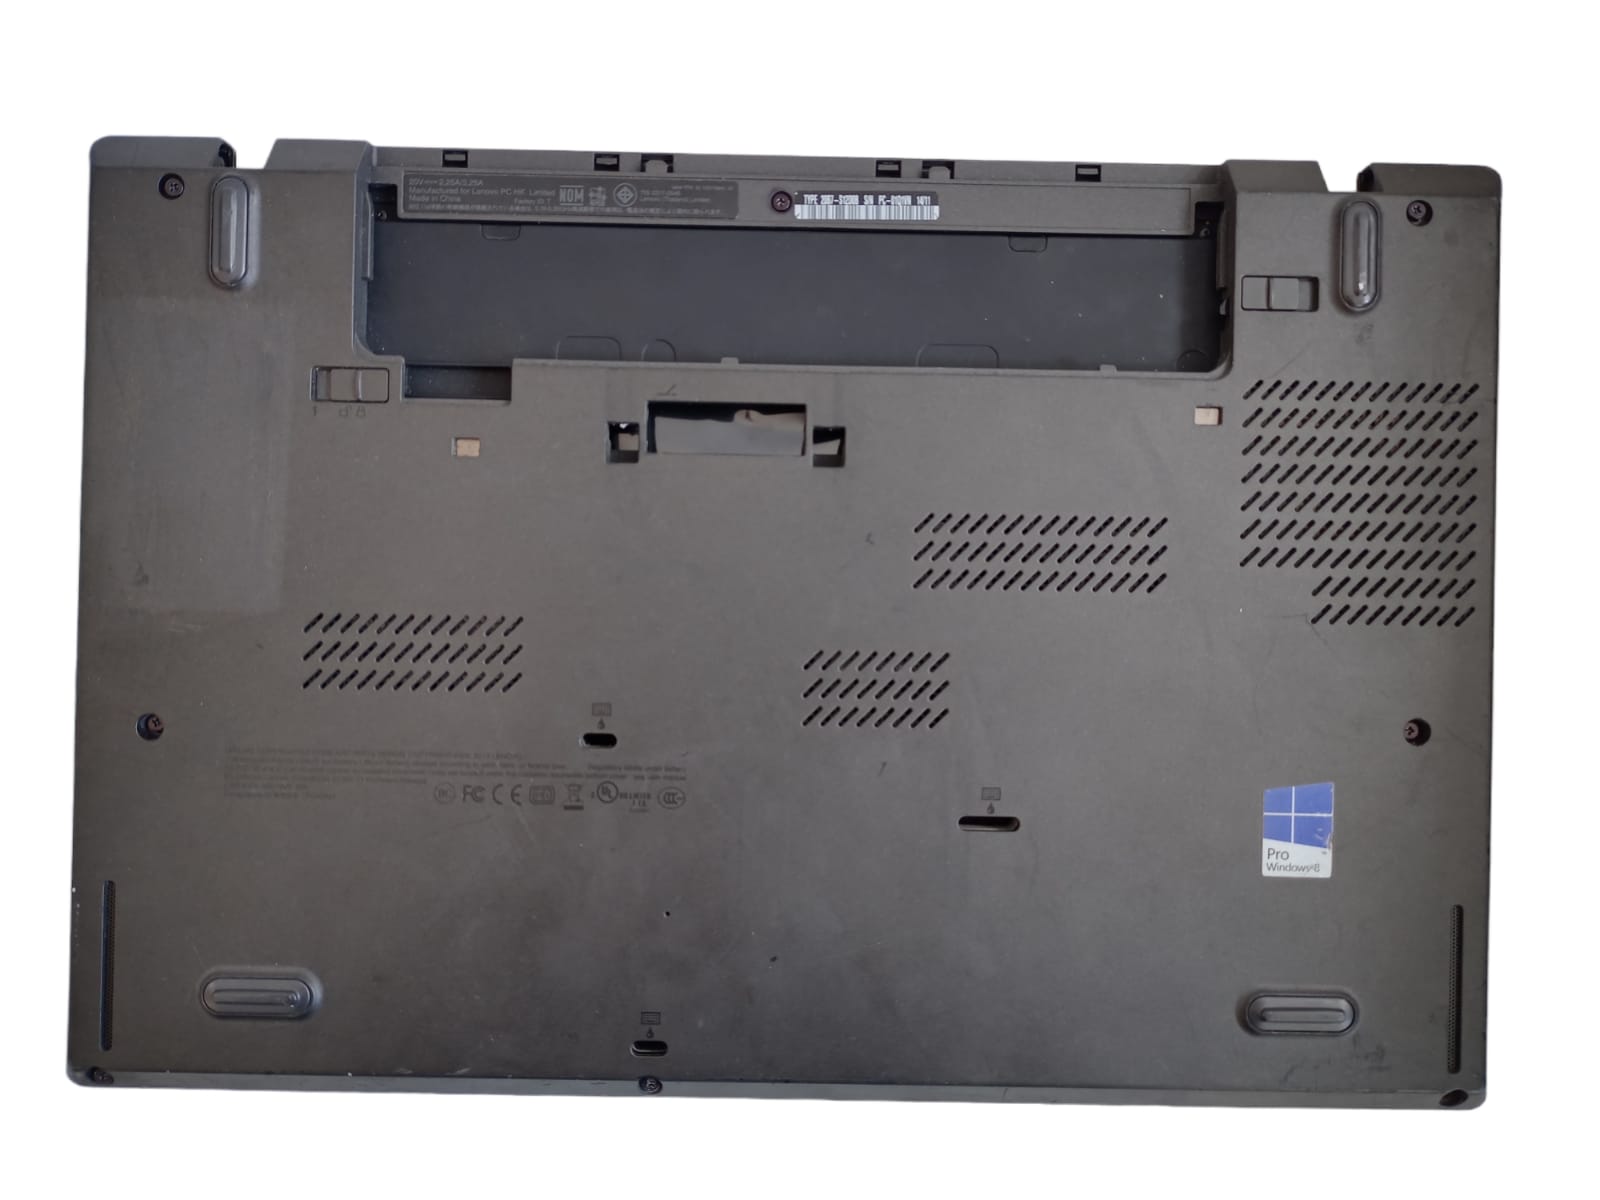 Carcasa base superior - inferior y Palmrest  de Laptop Lenovo Thinkpad T440  (Producto usado)